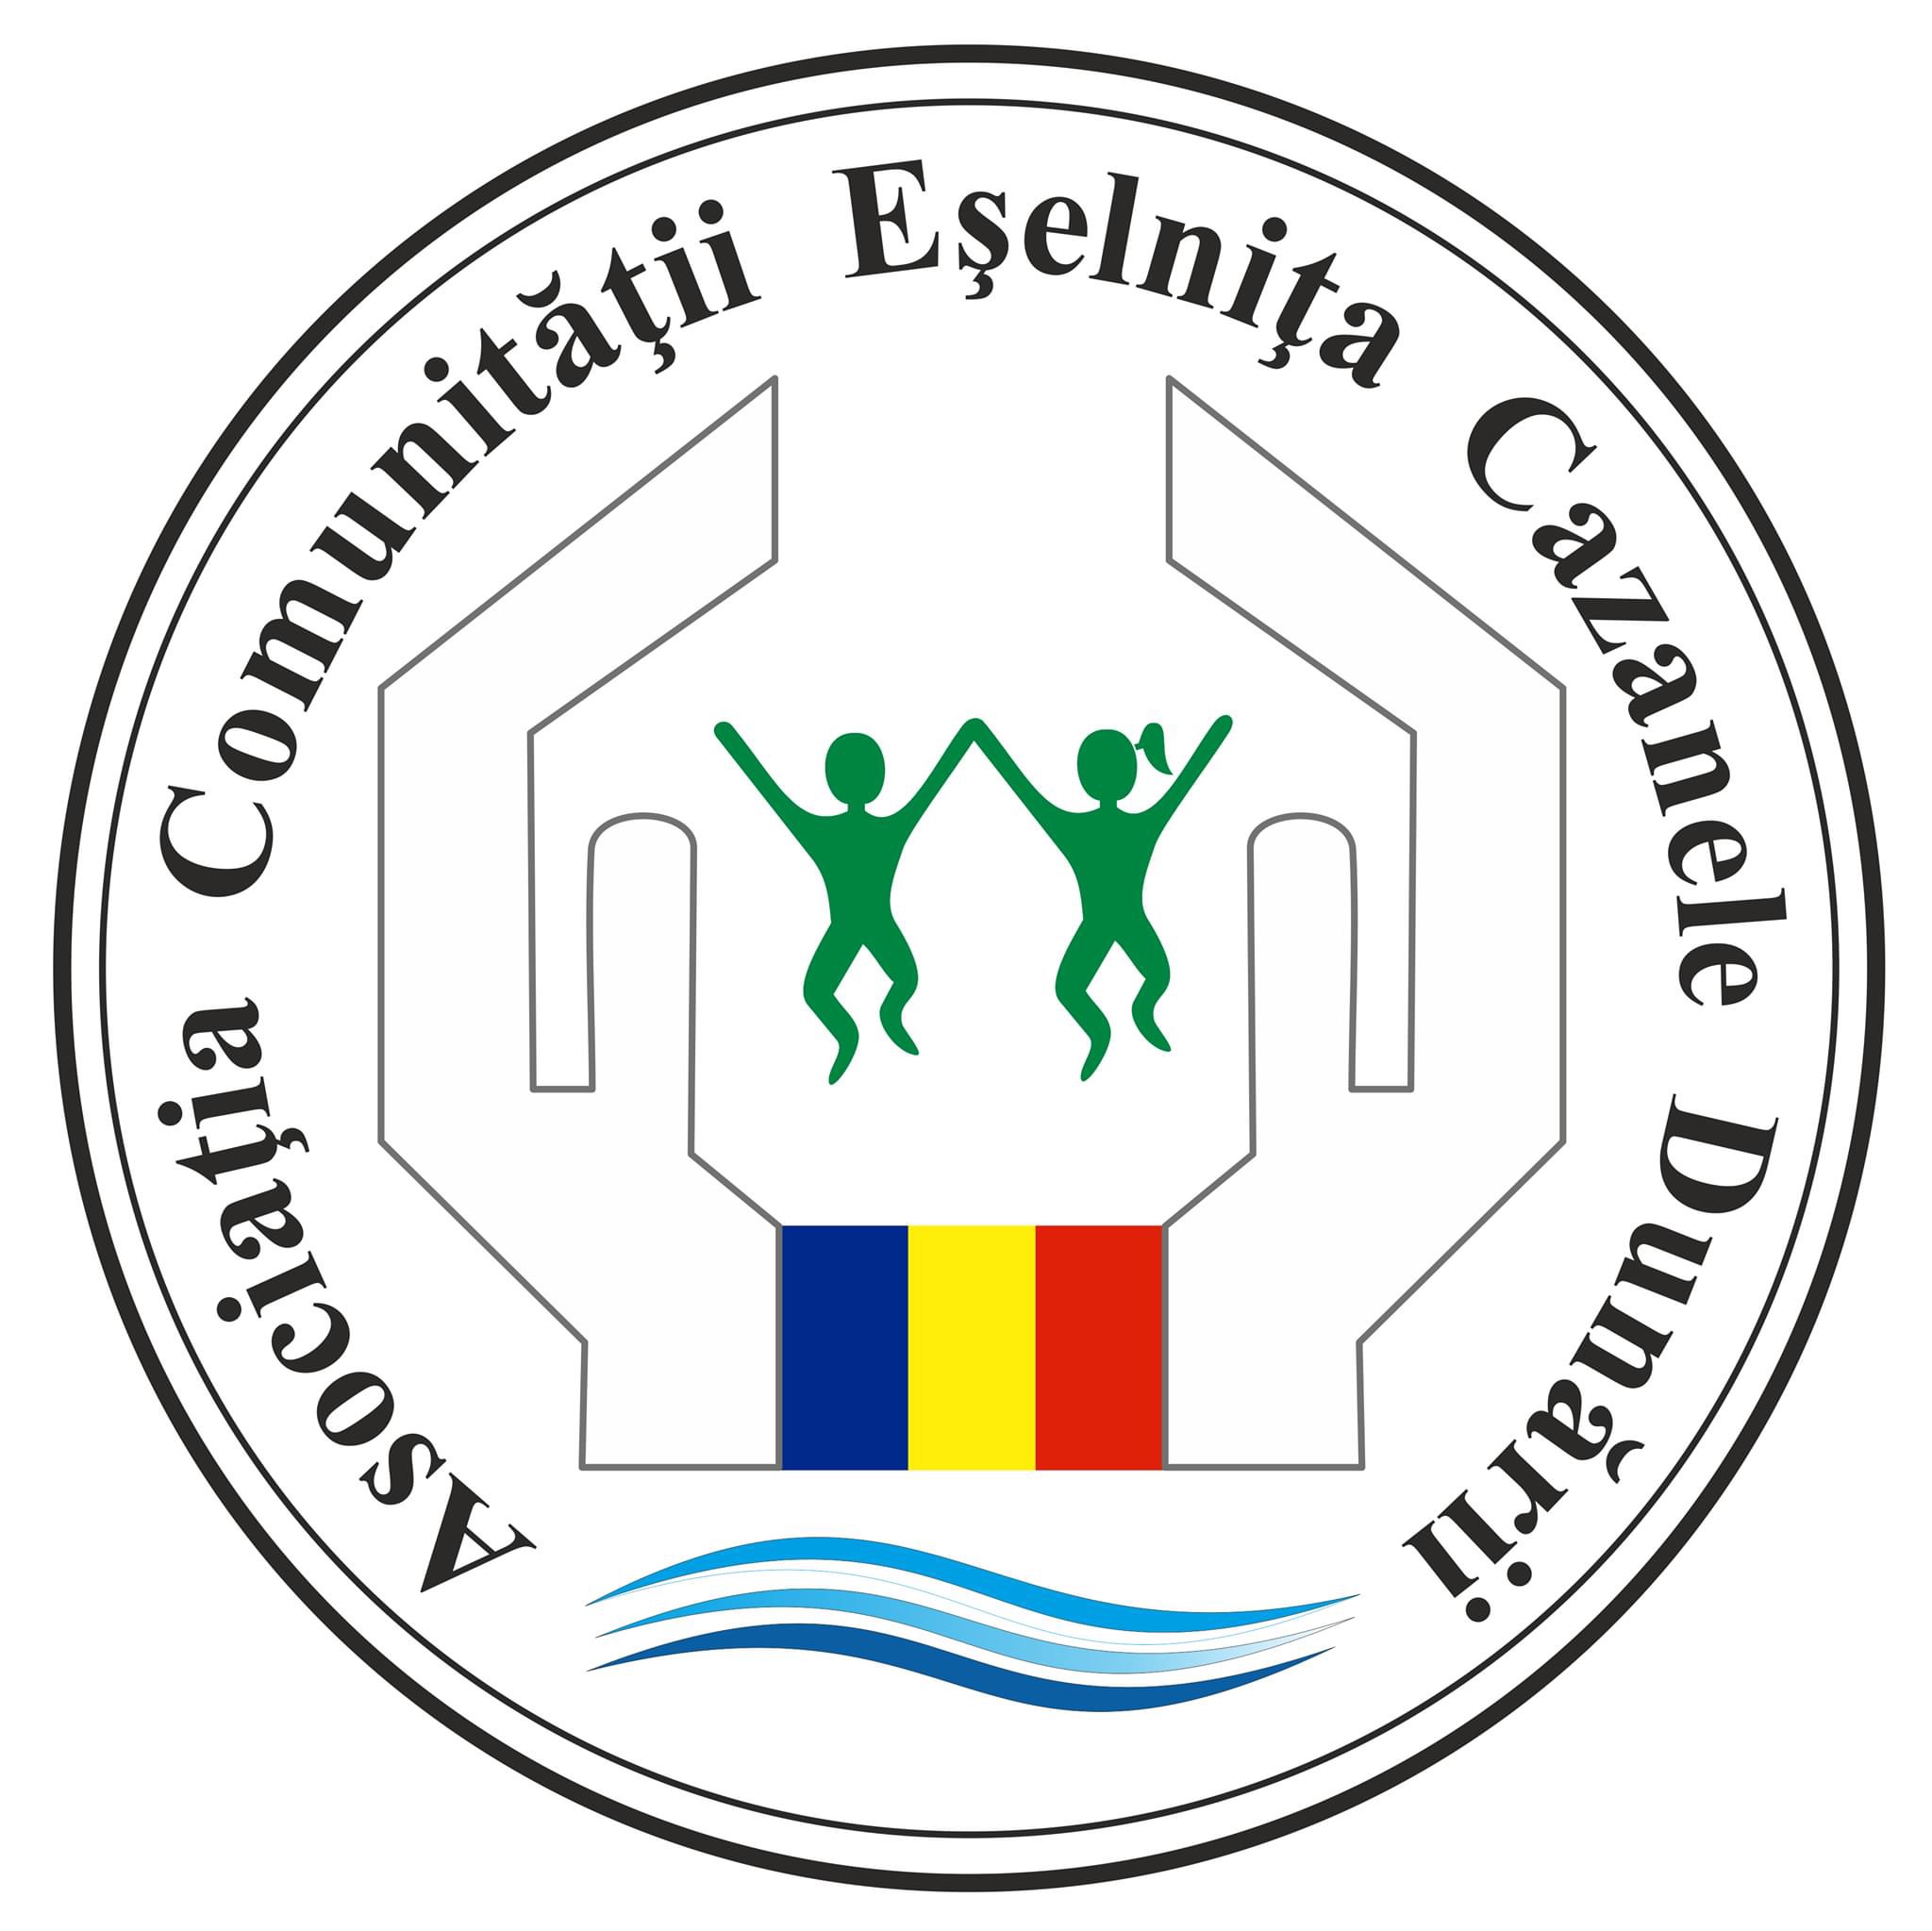 Asociatia Comunitatii Eselnita Cazanele Dunarii logo